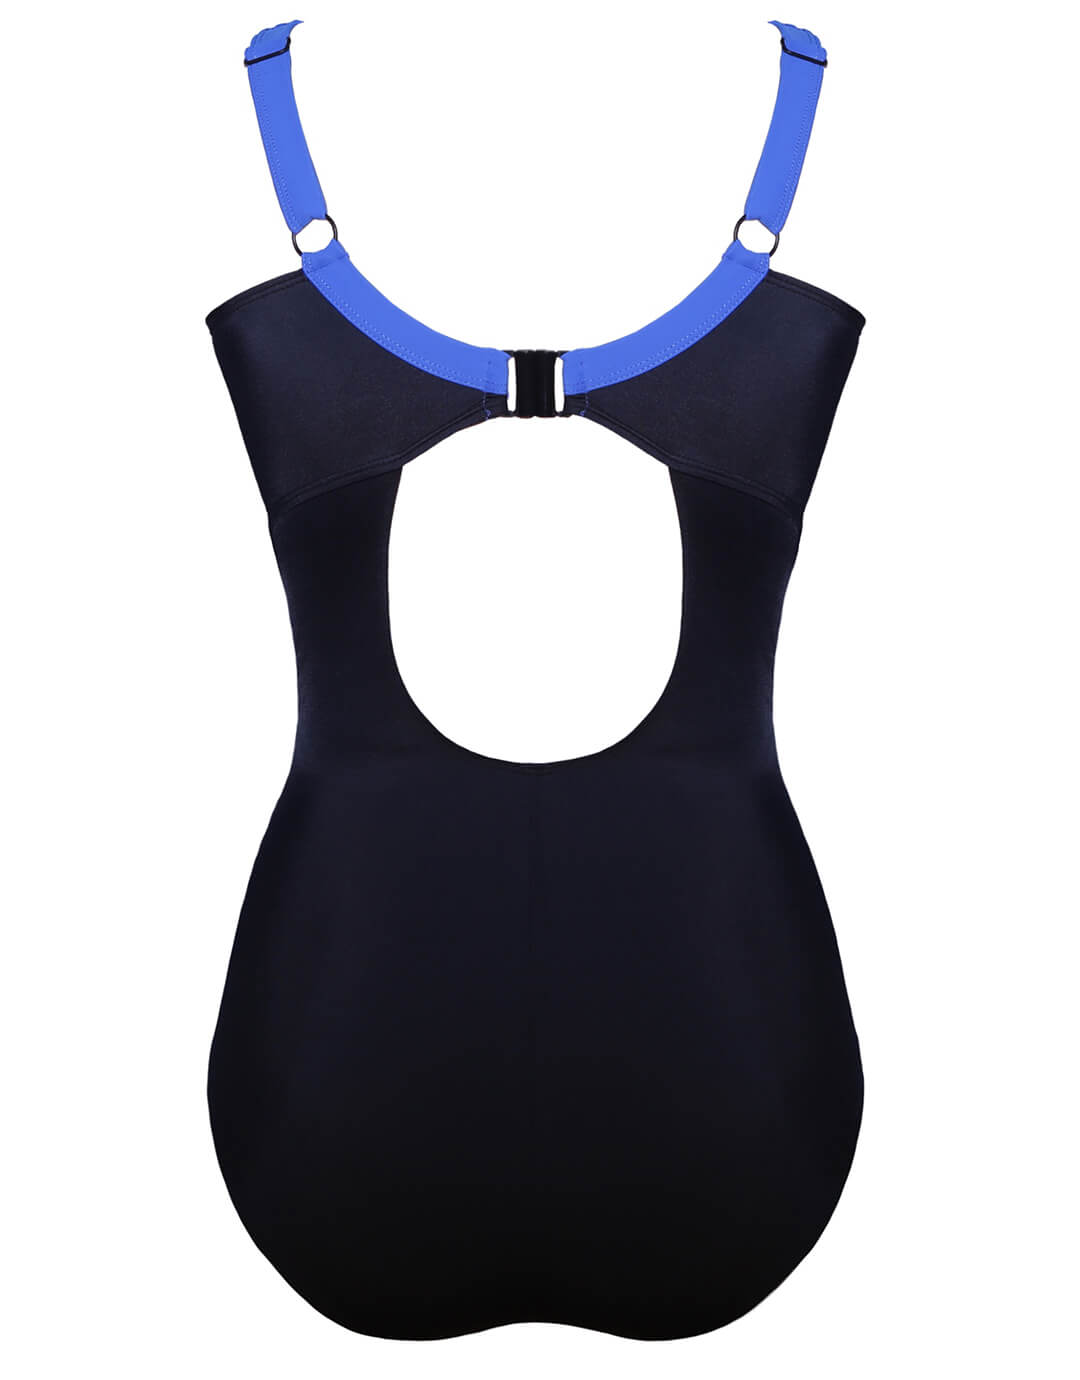 Stella Longer Length Clipback Swimsuit - Black and Blue